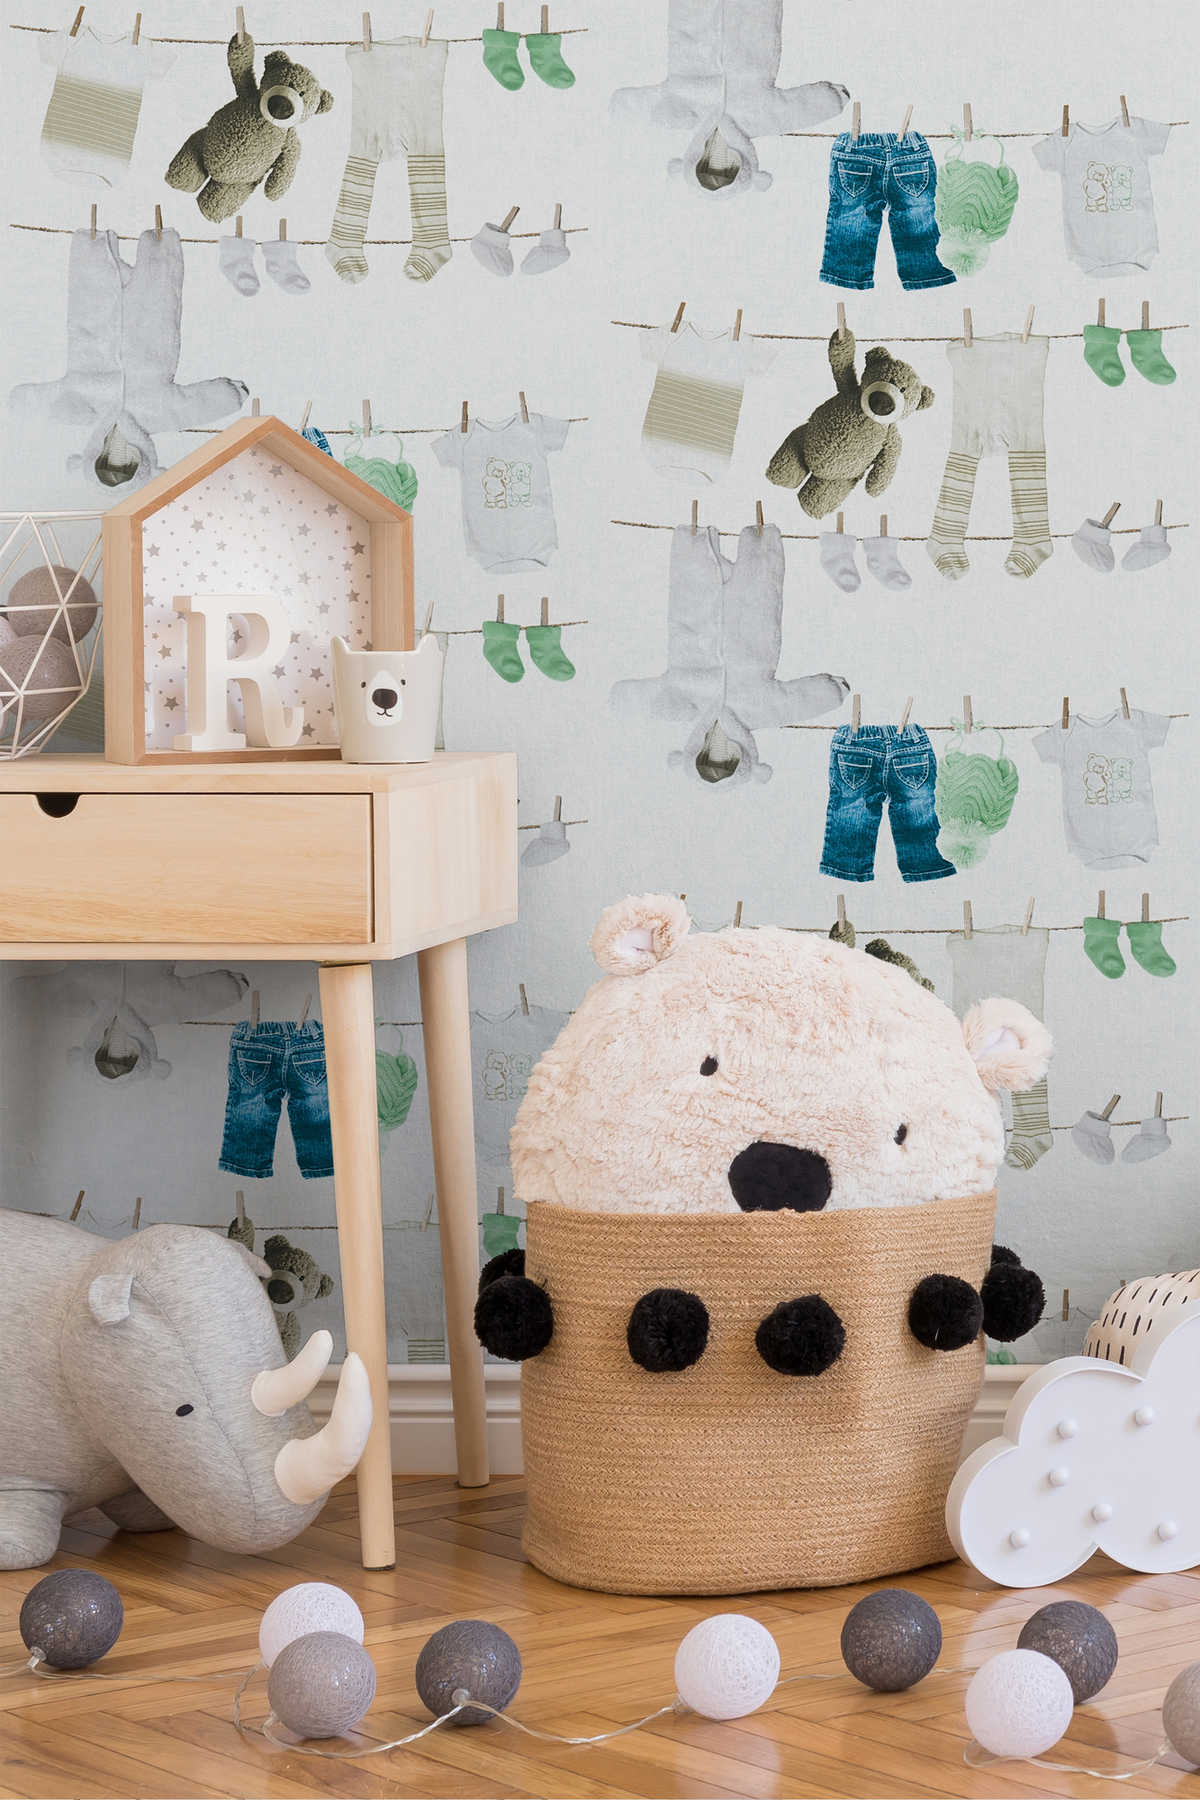             Nursery wallpaper baby clothesline with teddy bear - cream
        